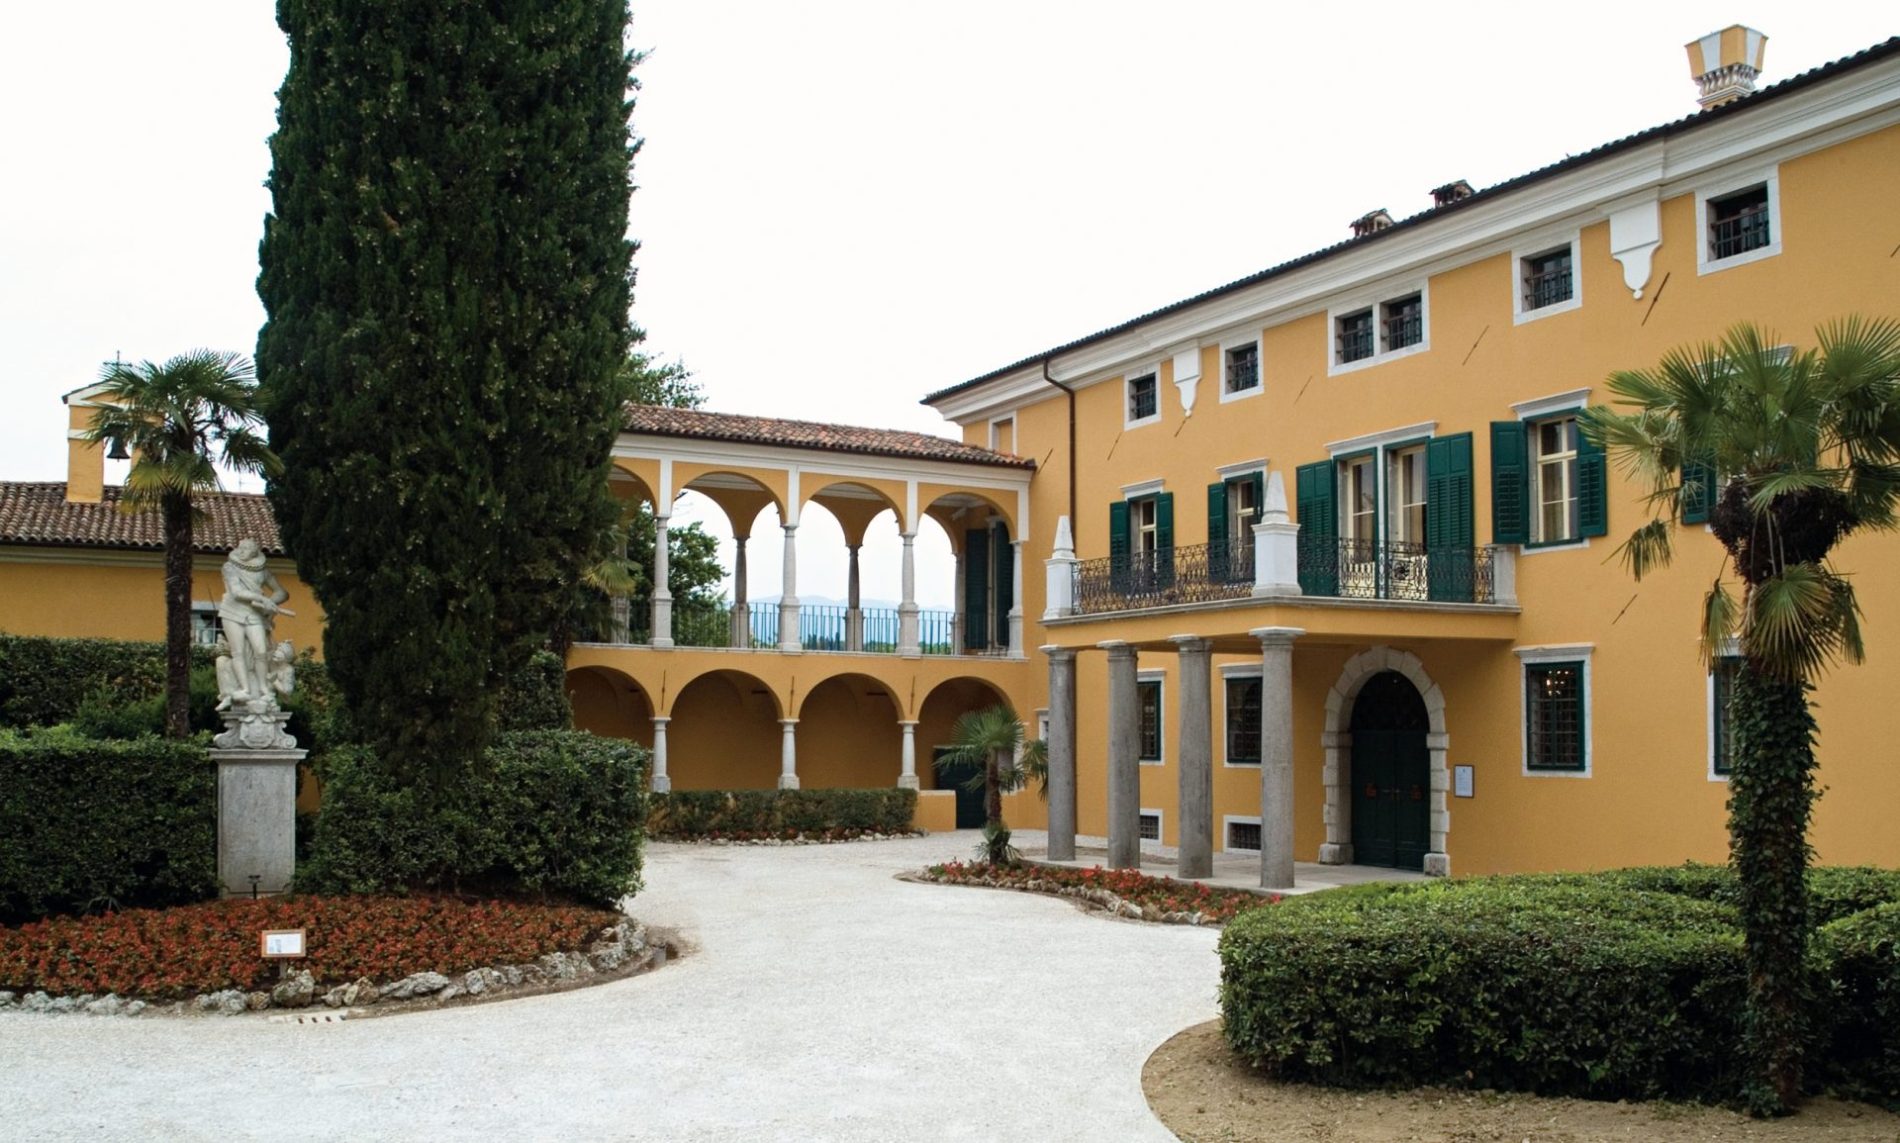 Palazzo-Coronini-Cronberg-Gorizia-Claudio-Scaulzero-PromoTurismoFVG(4)